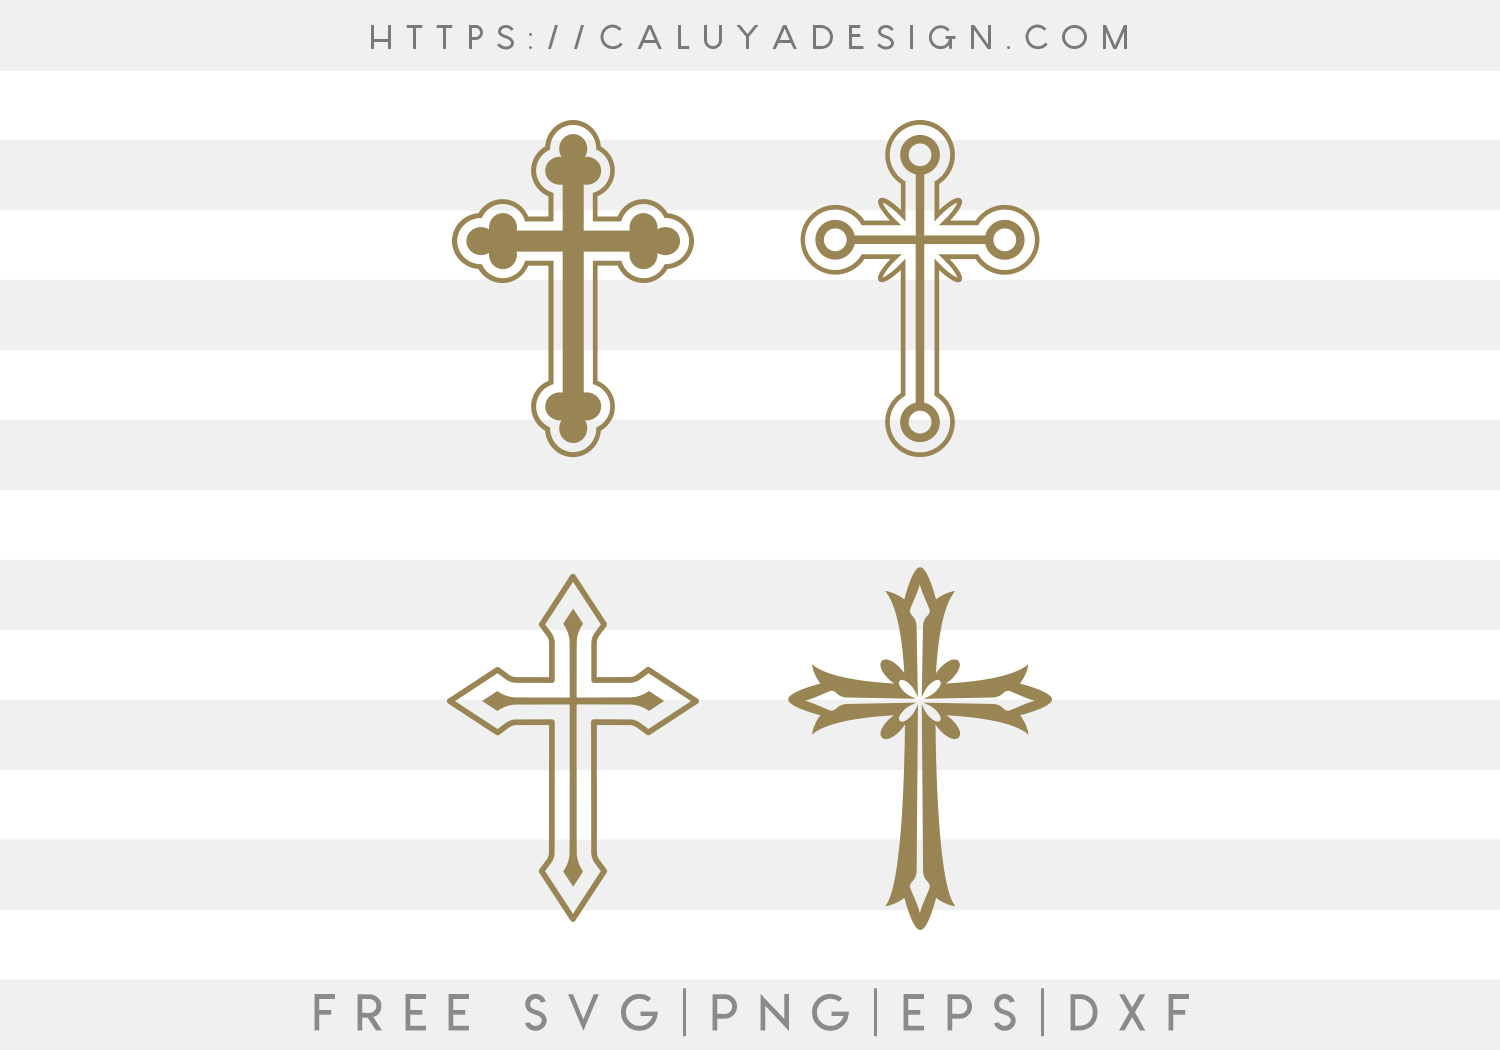 Free Vintage Cross Svg Png Eps Dxf By Caluya Design